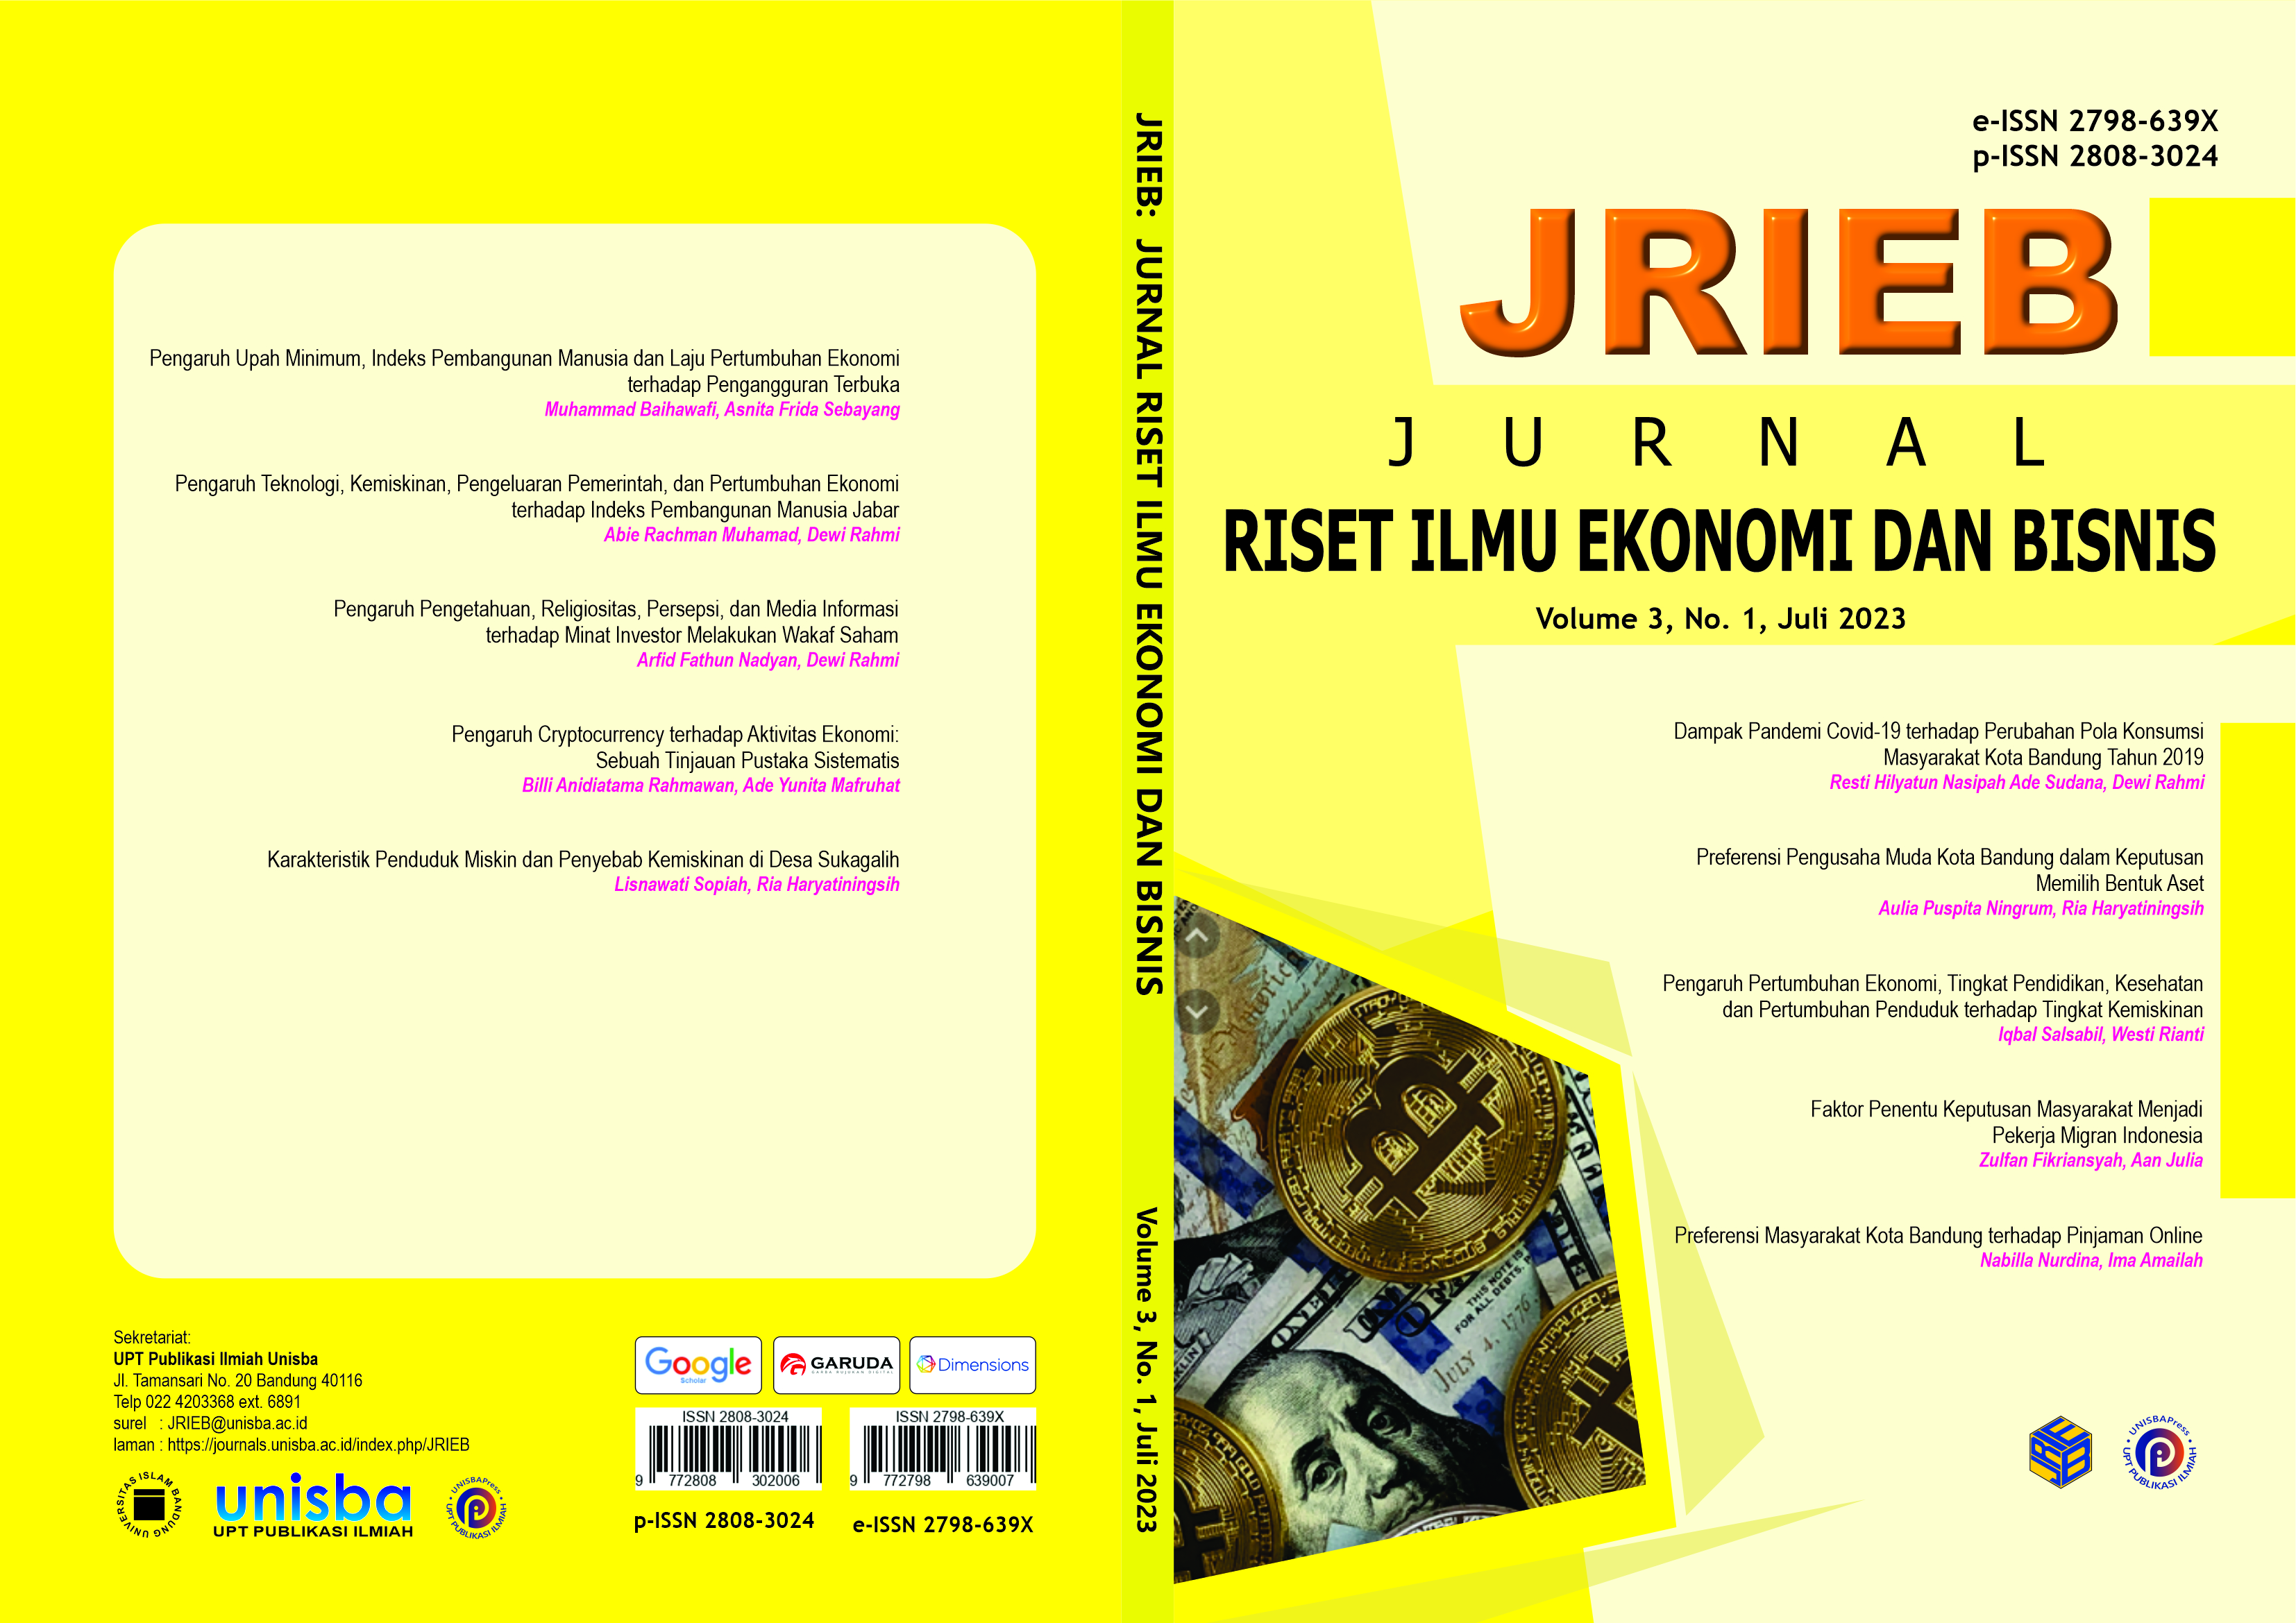 					View Volume 3, No. 1, Juli 2023, Jurnal Riset Ilmu Ekonomi dan Bisnis (JRIEB)
				